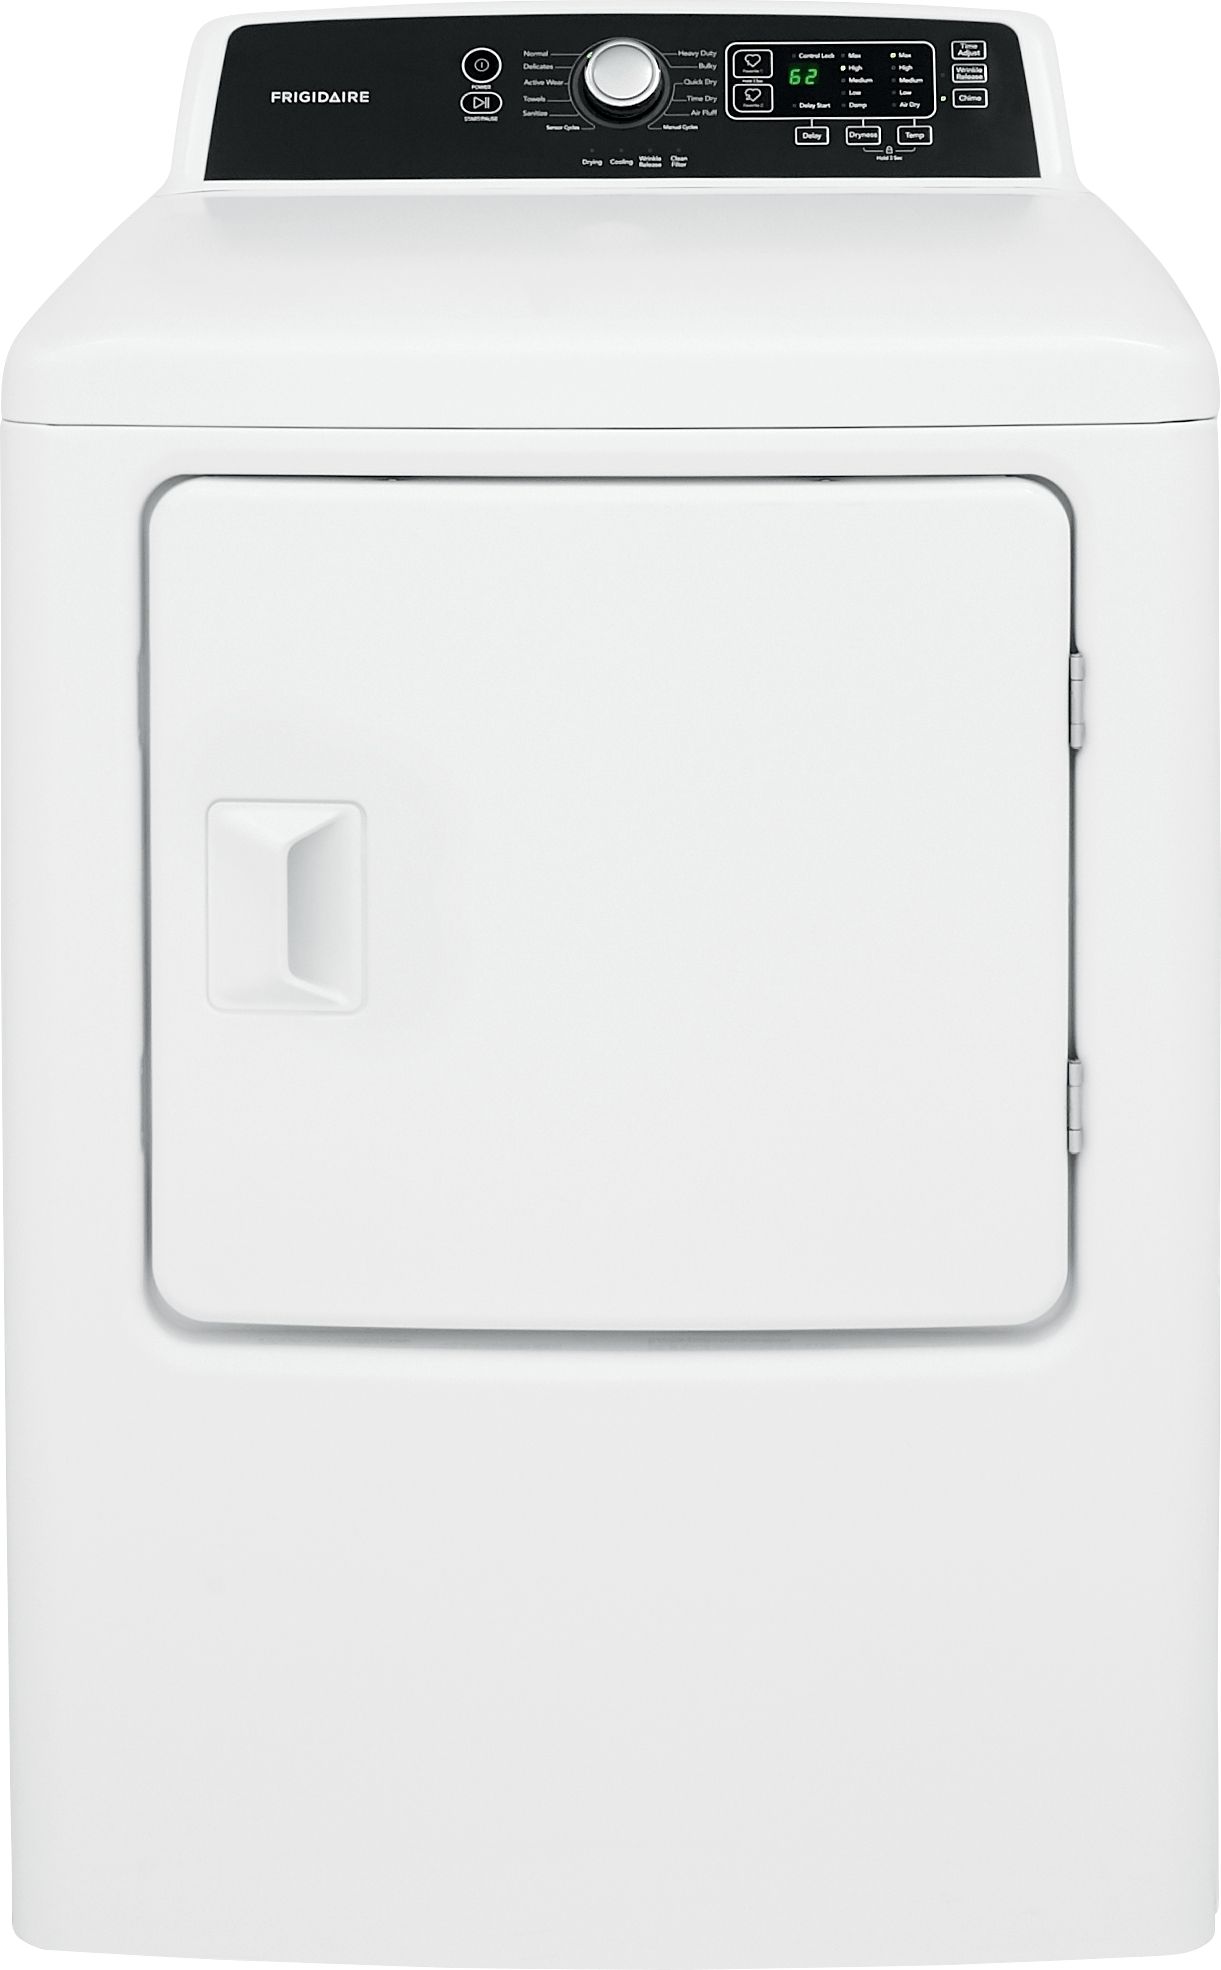 Frigidaire® 6.7 Cu. Ft. Classic White Gas Dryer